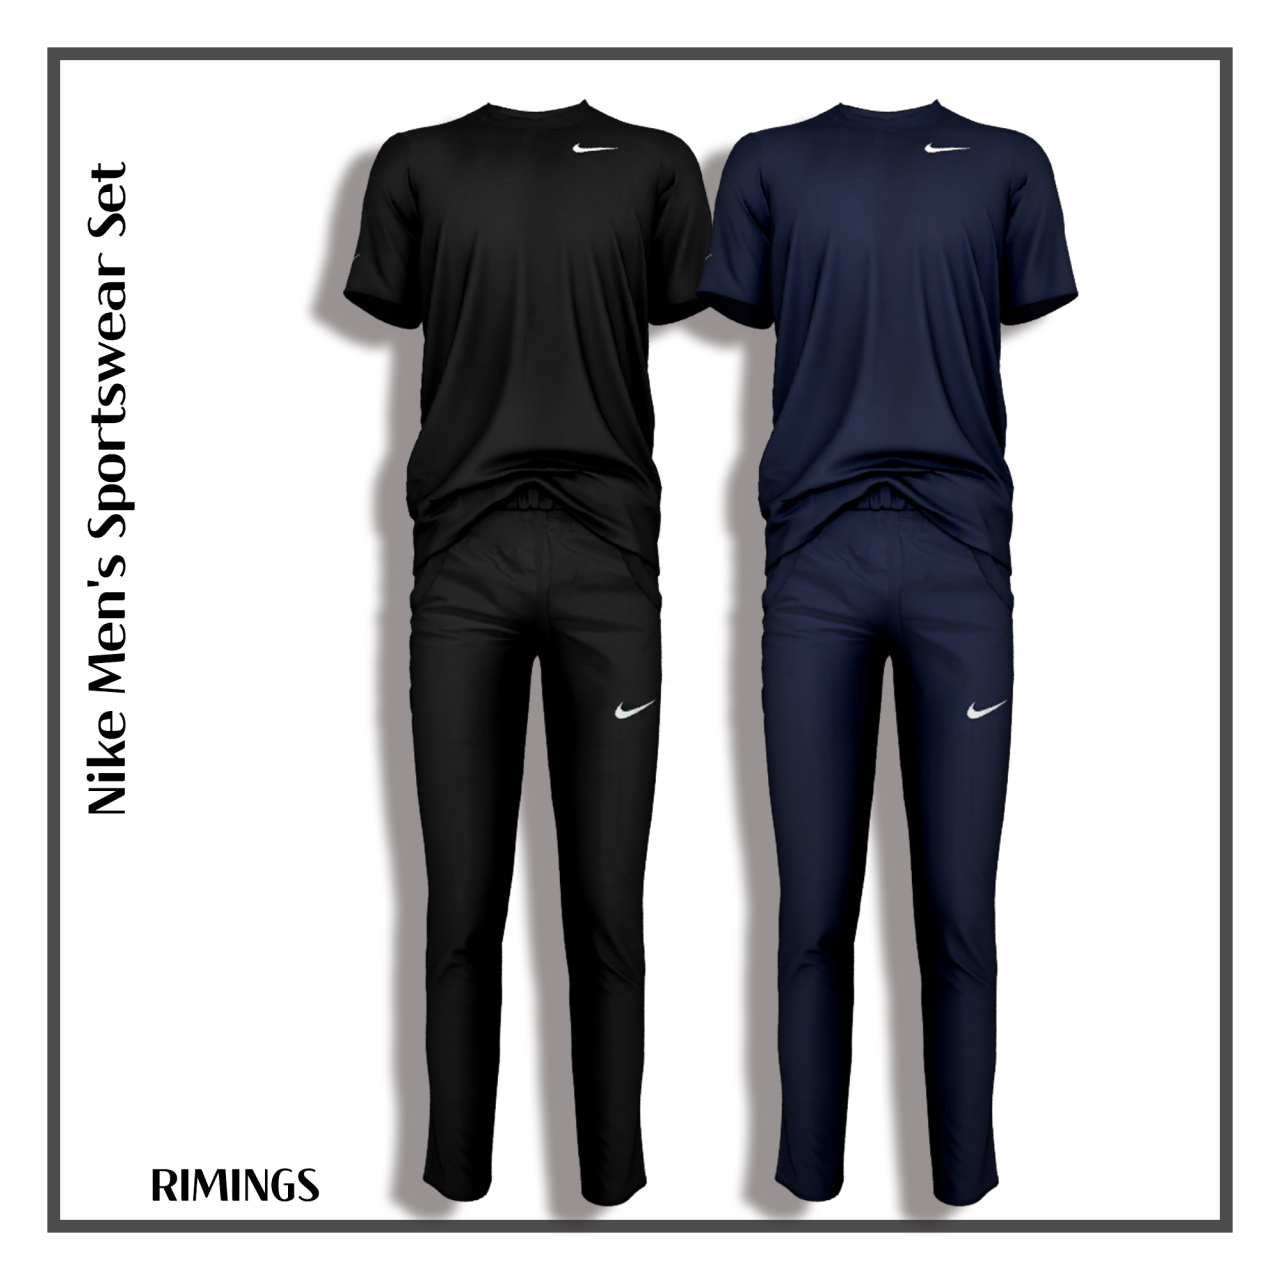 RIMINGS — [RIMINGS] Men's Sportswear Set - FULL BODY...